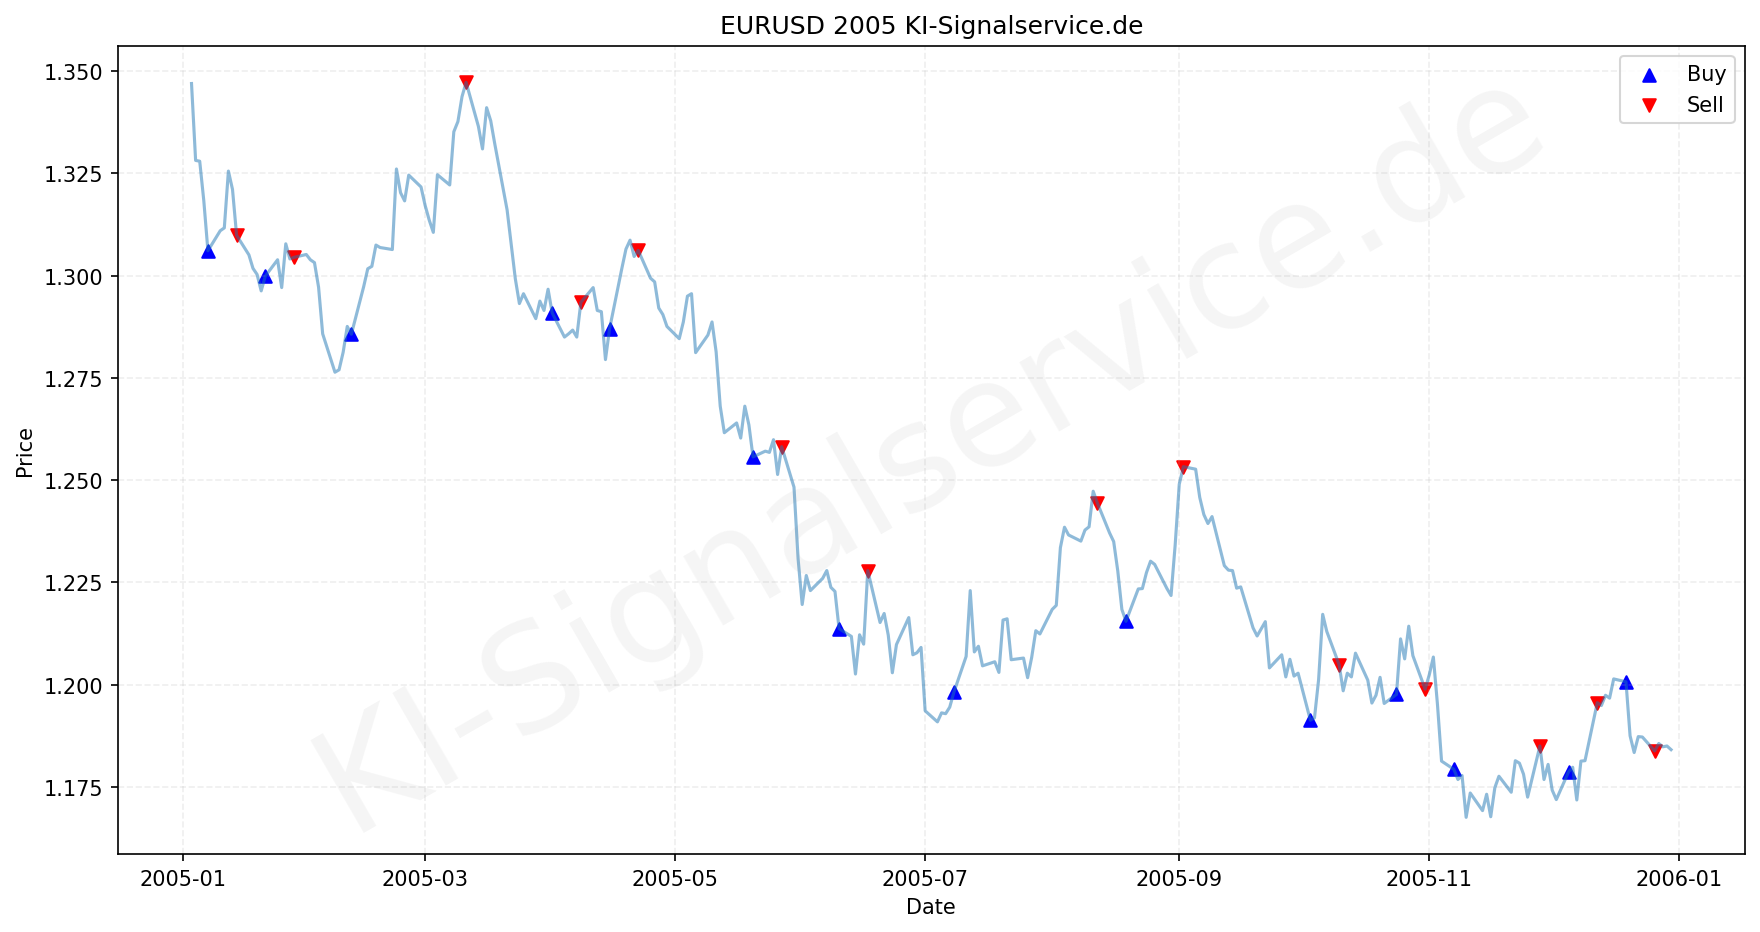 EURUSD Chart - KI Tradingsignale 2005